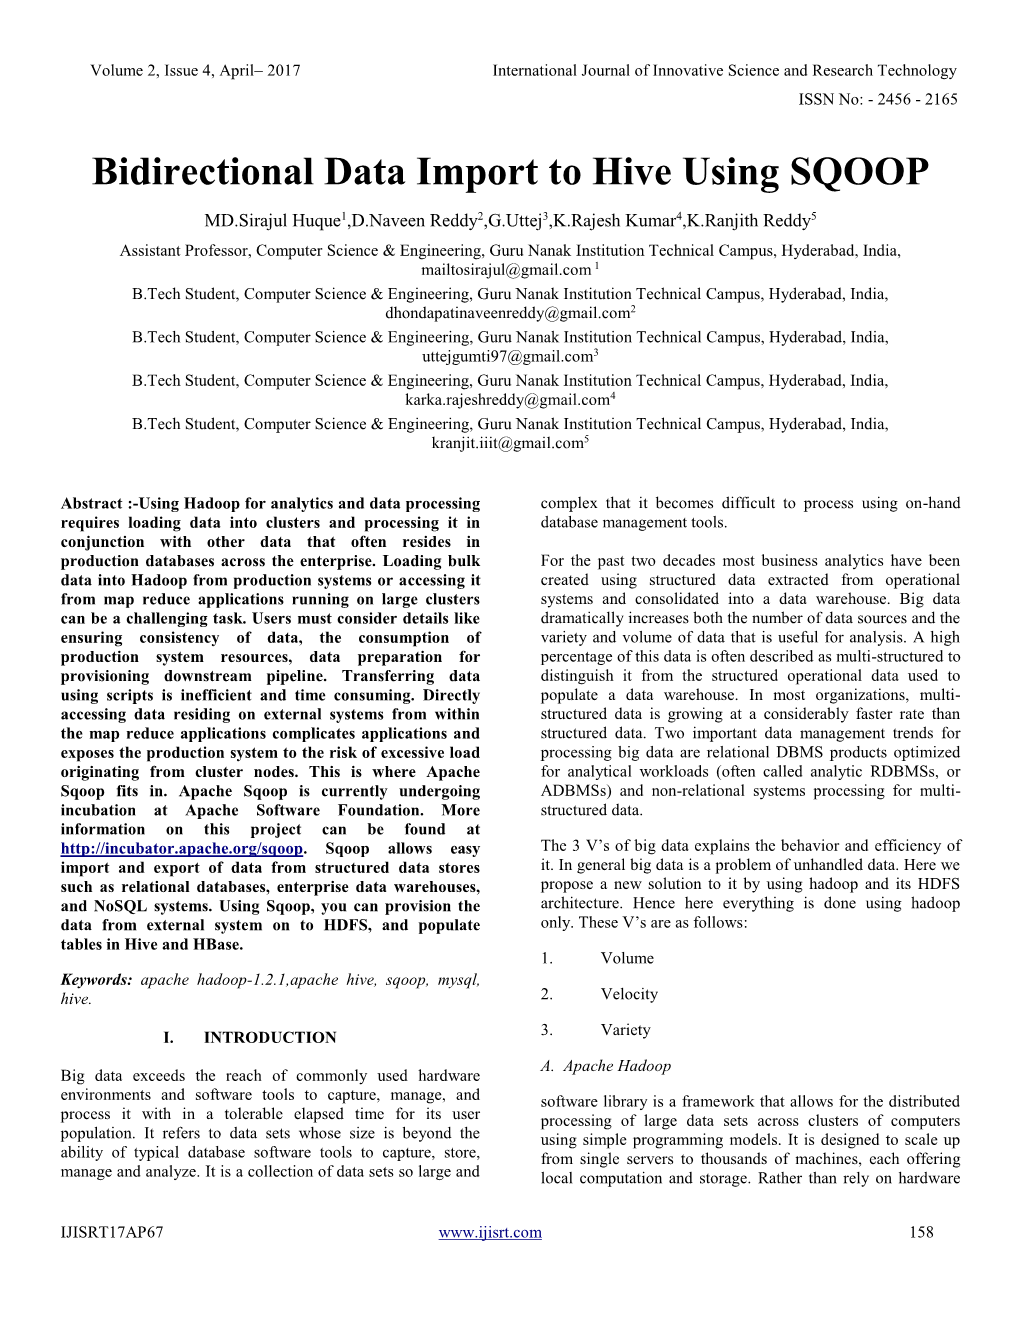 Bidirectional Data Import to Hive Using SQOOP